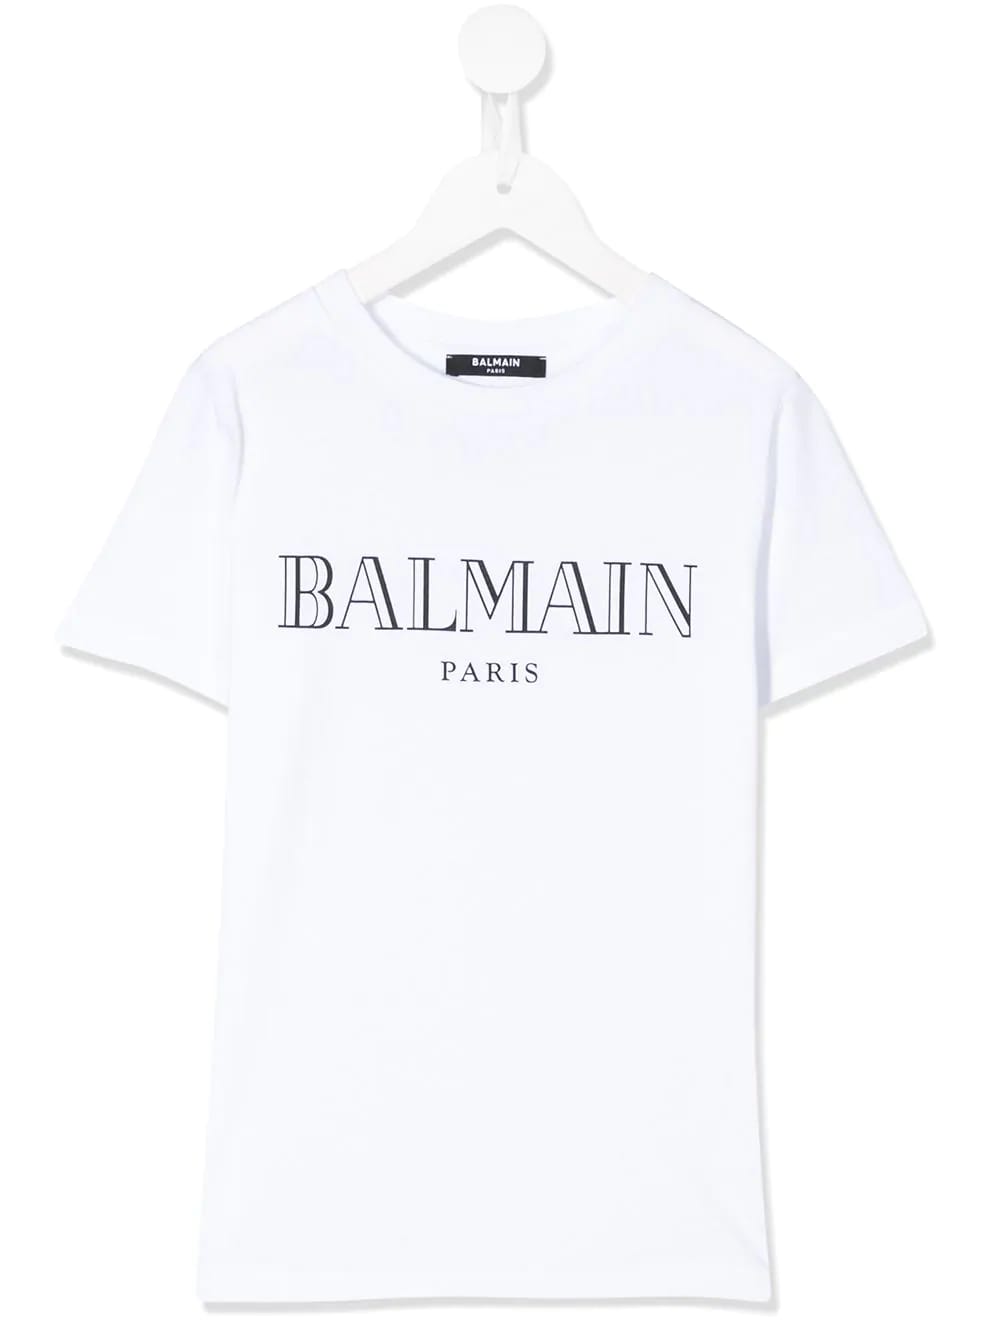 Balmain Unisex Kid White T-shirt With Black Logo